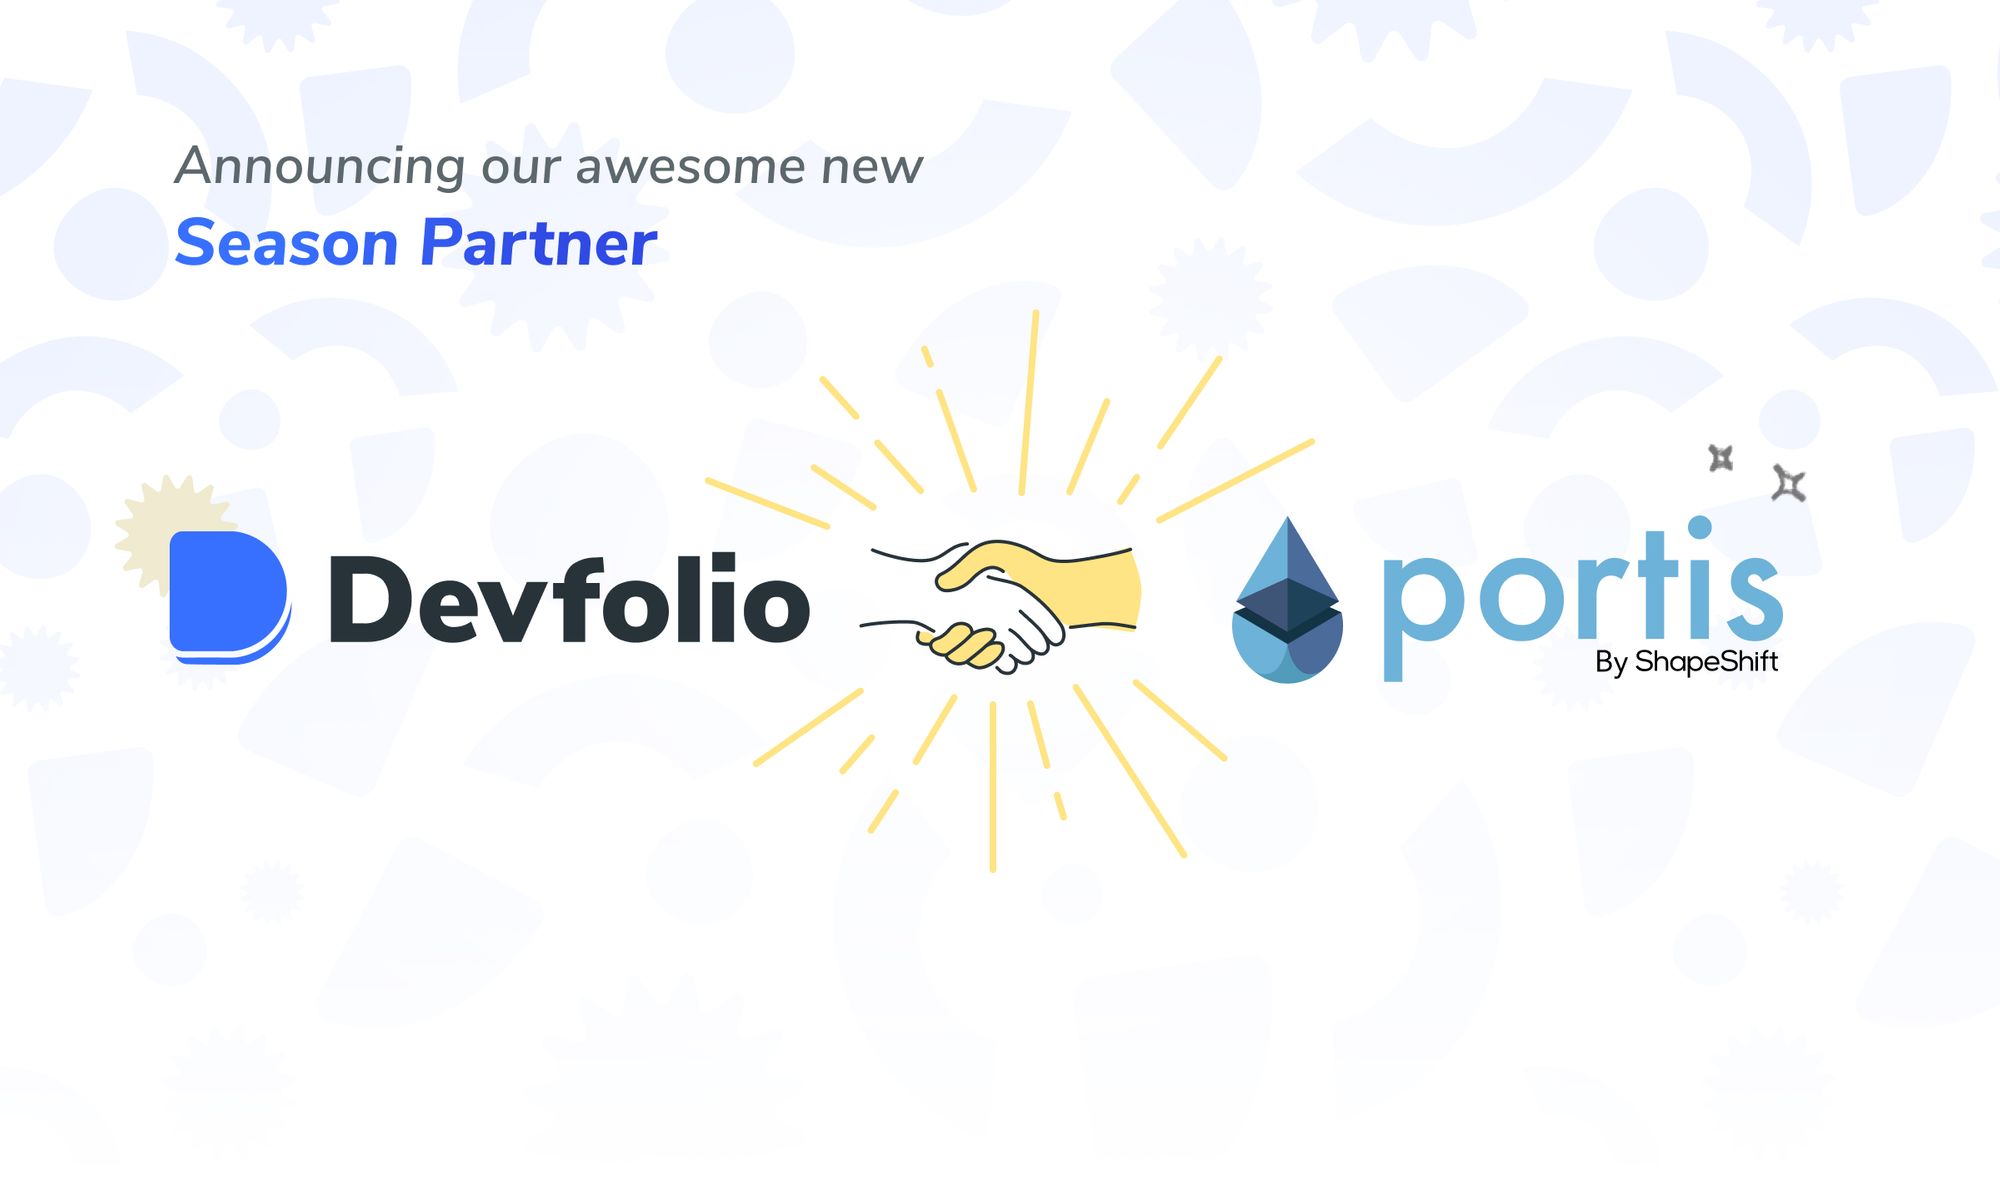 Welcoming Portis by ShapeShift as a Devfolio Season Partner 🎉